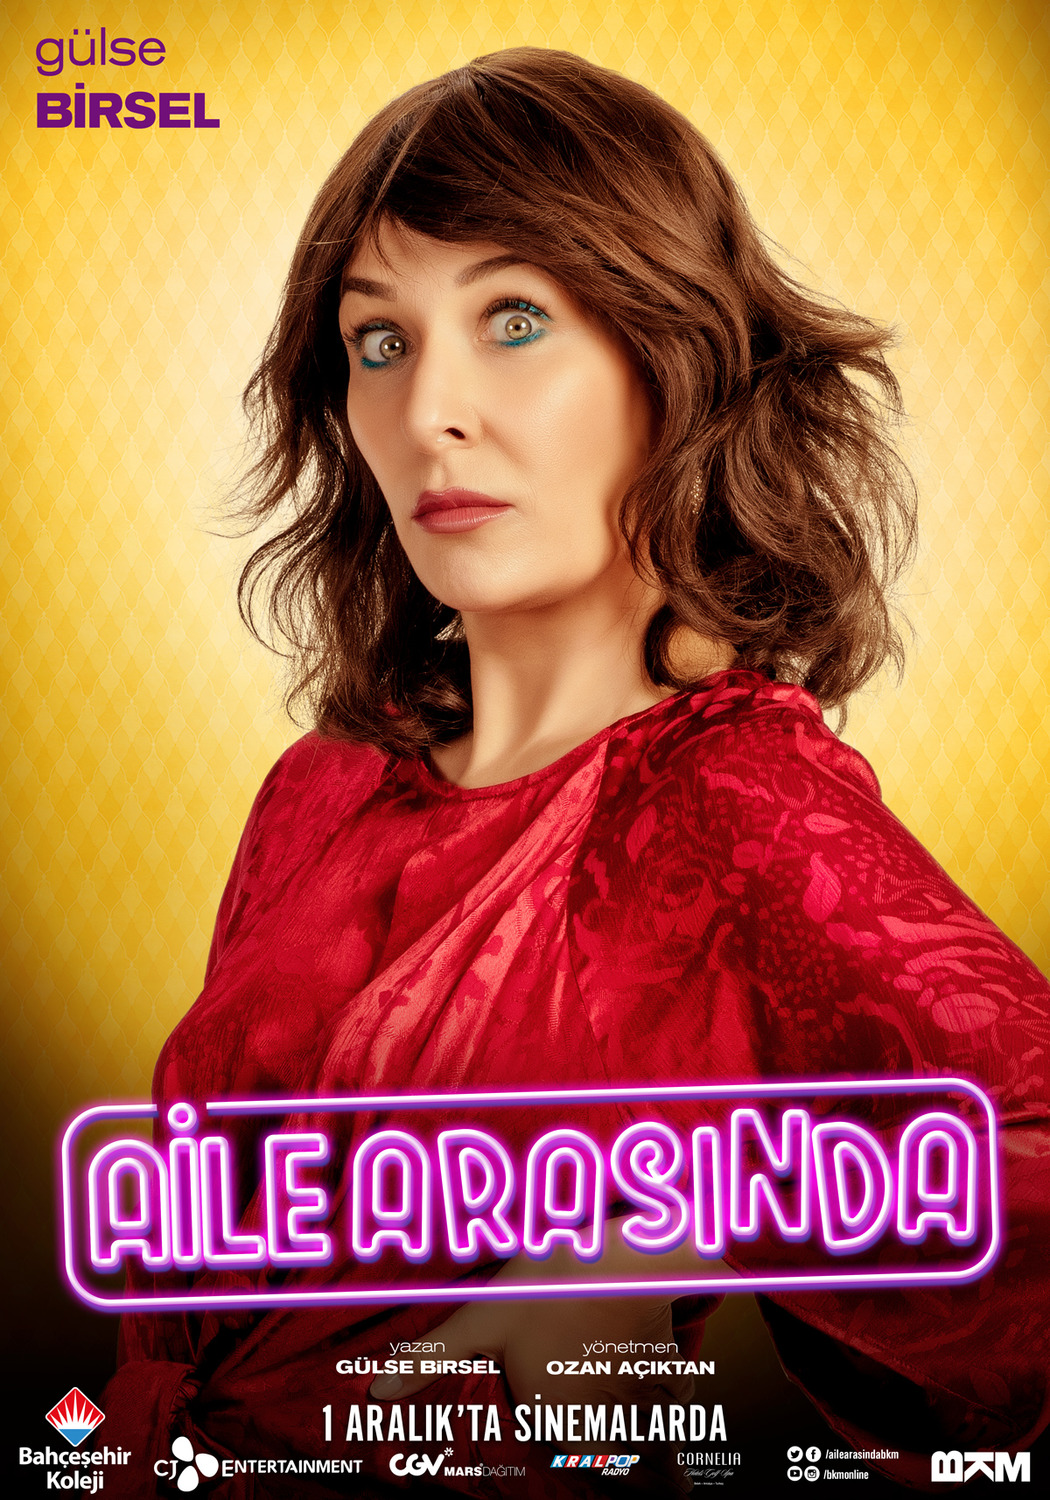 Extra Large Movie Poster Image for Aile Arasinda (#11 of 13)